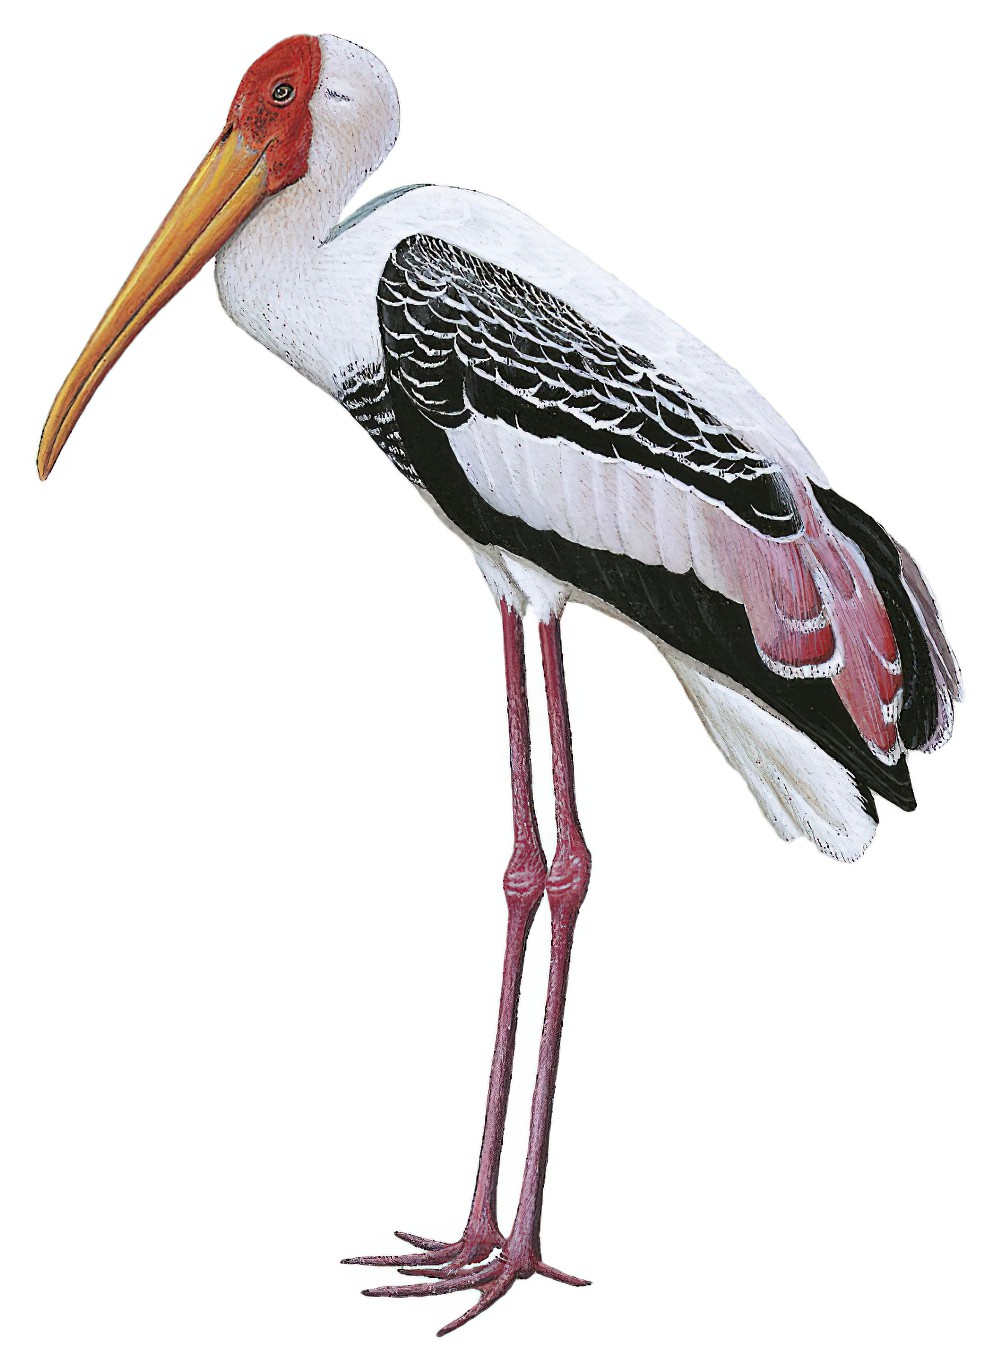 Painted Stork / Mycteria leucocephala